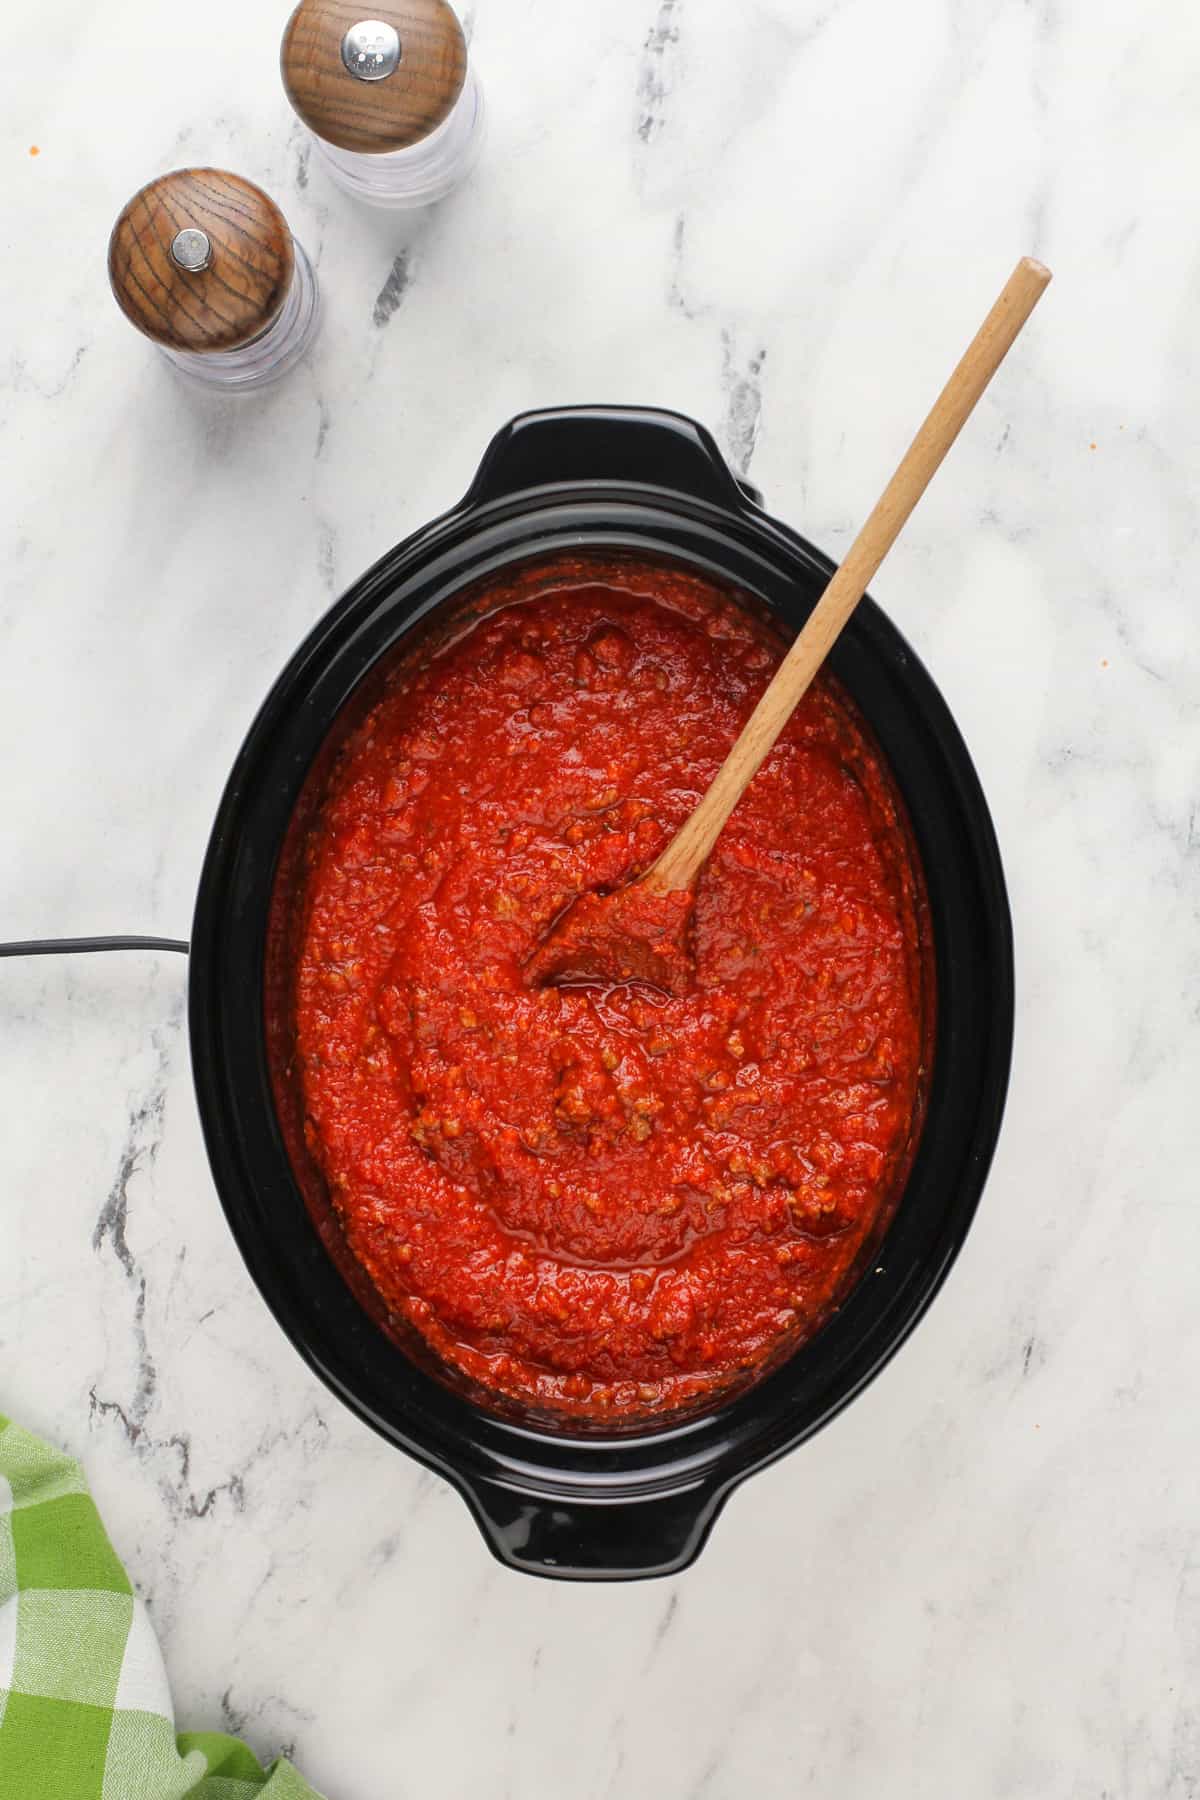 Wooden spoon stirring spaghetti sauce in a crockpot.